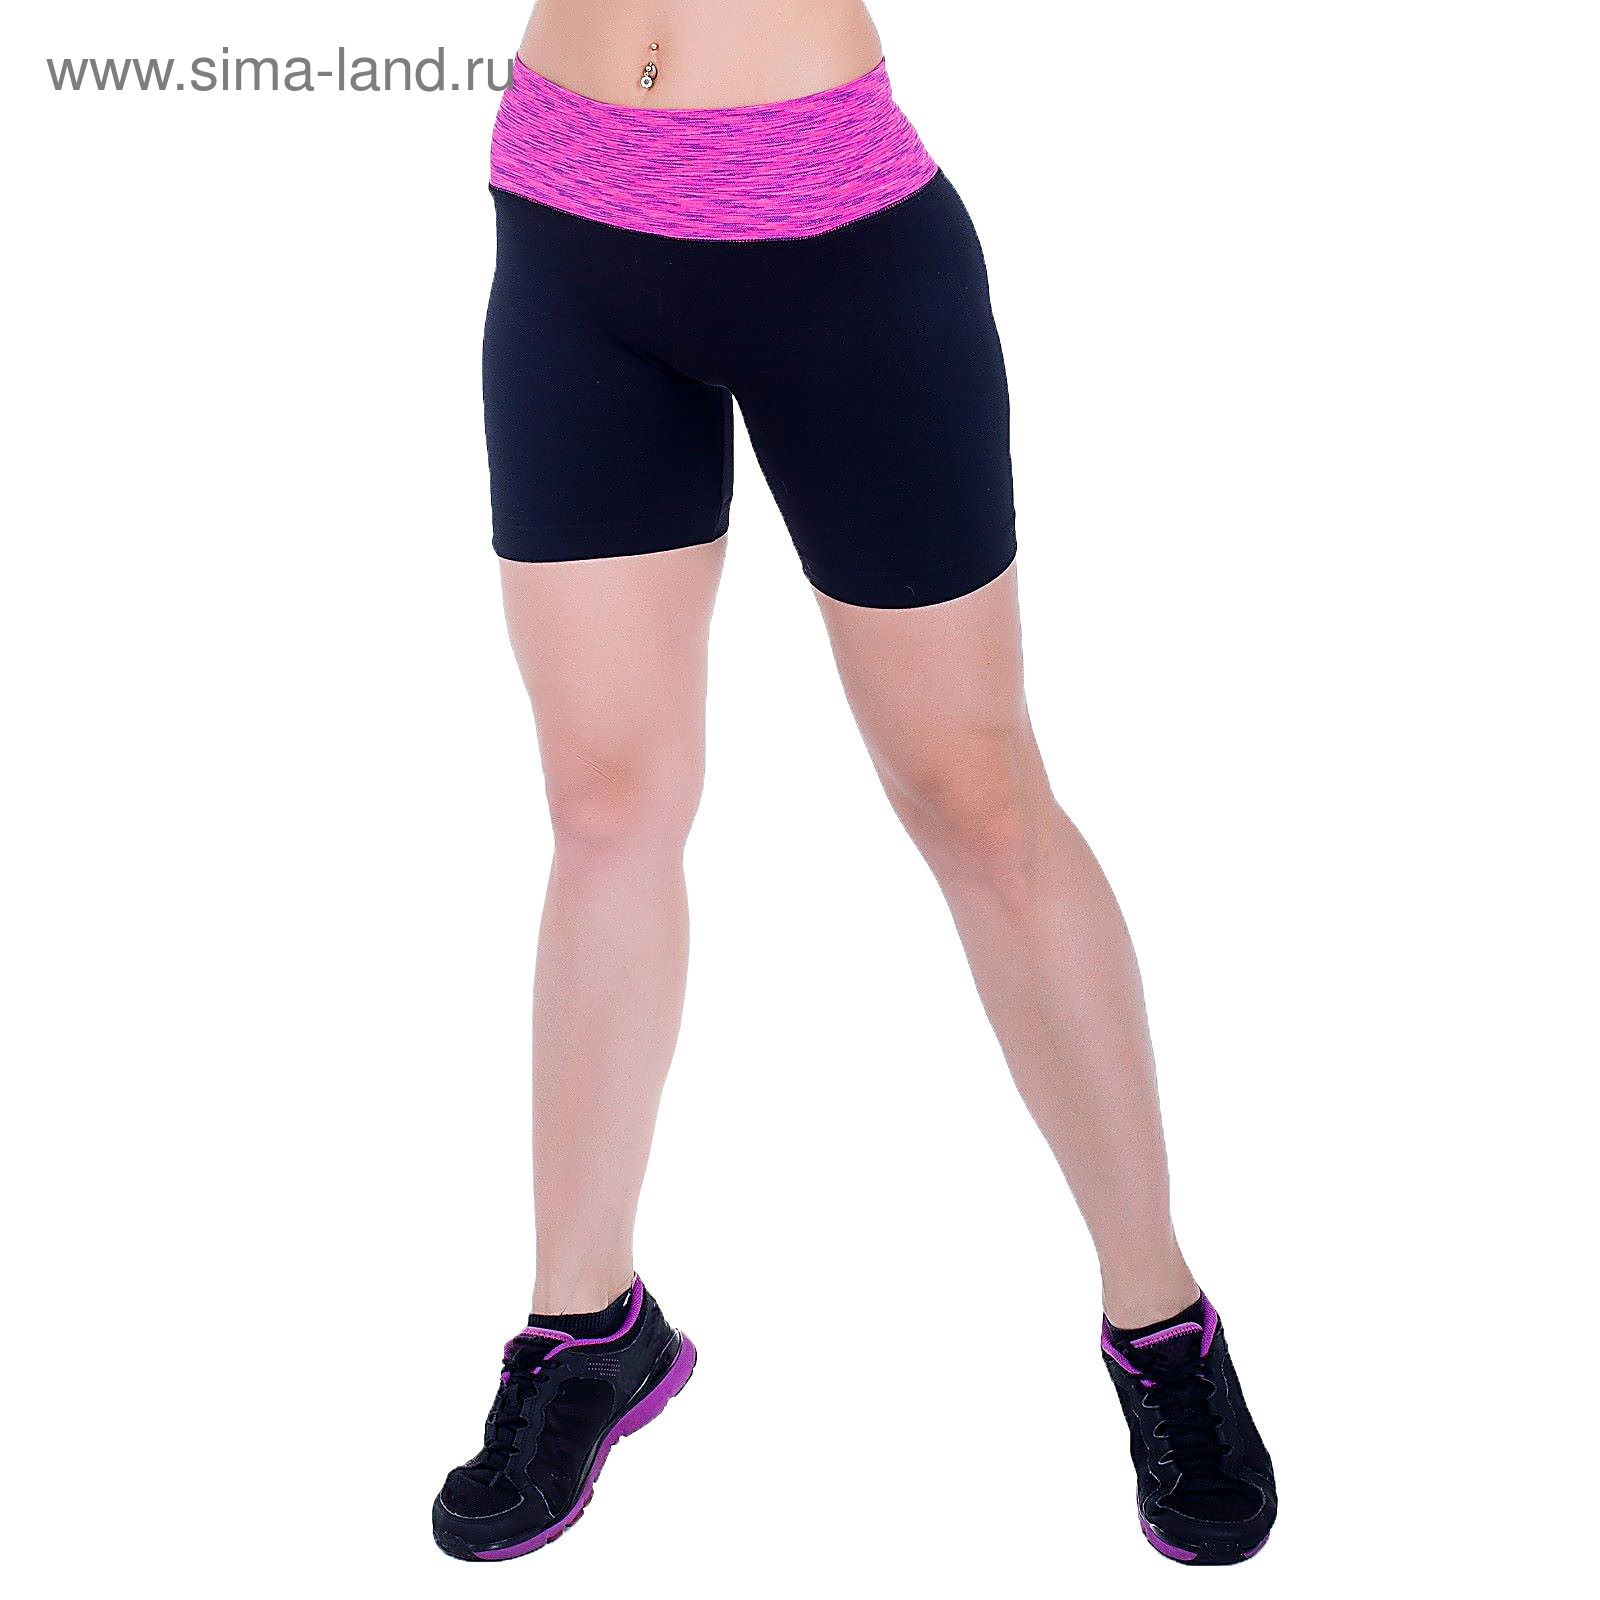 Спортивные шорты ONLITOP Fitness time fuchsia, размер S-M (42-44)